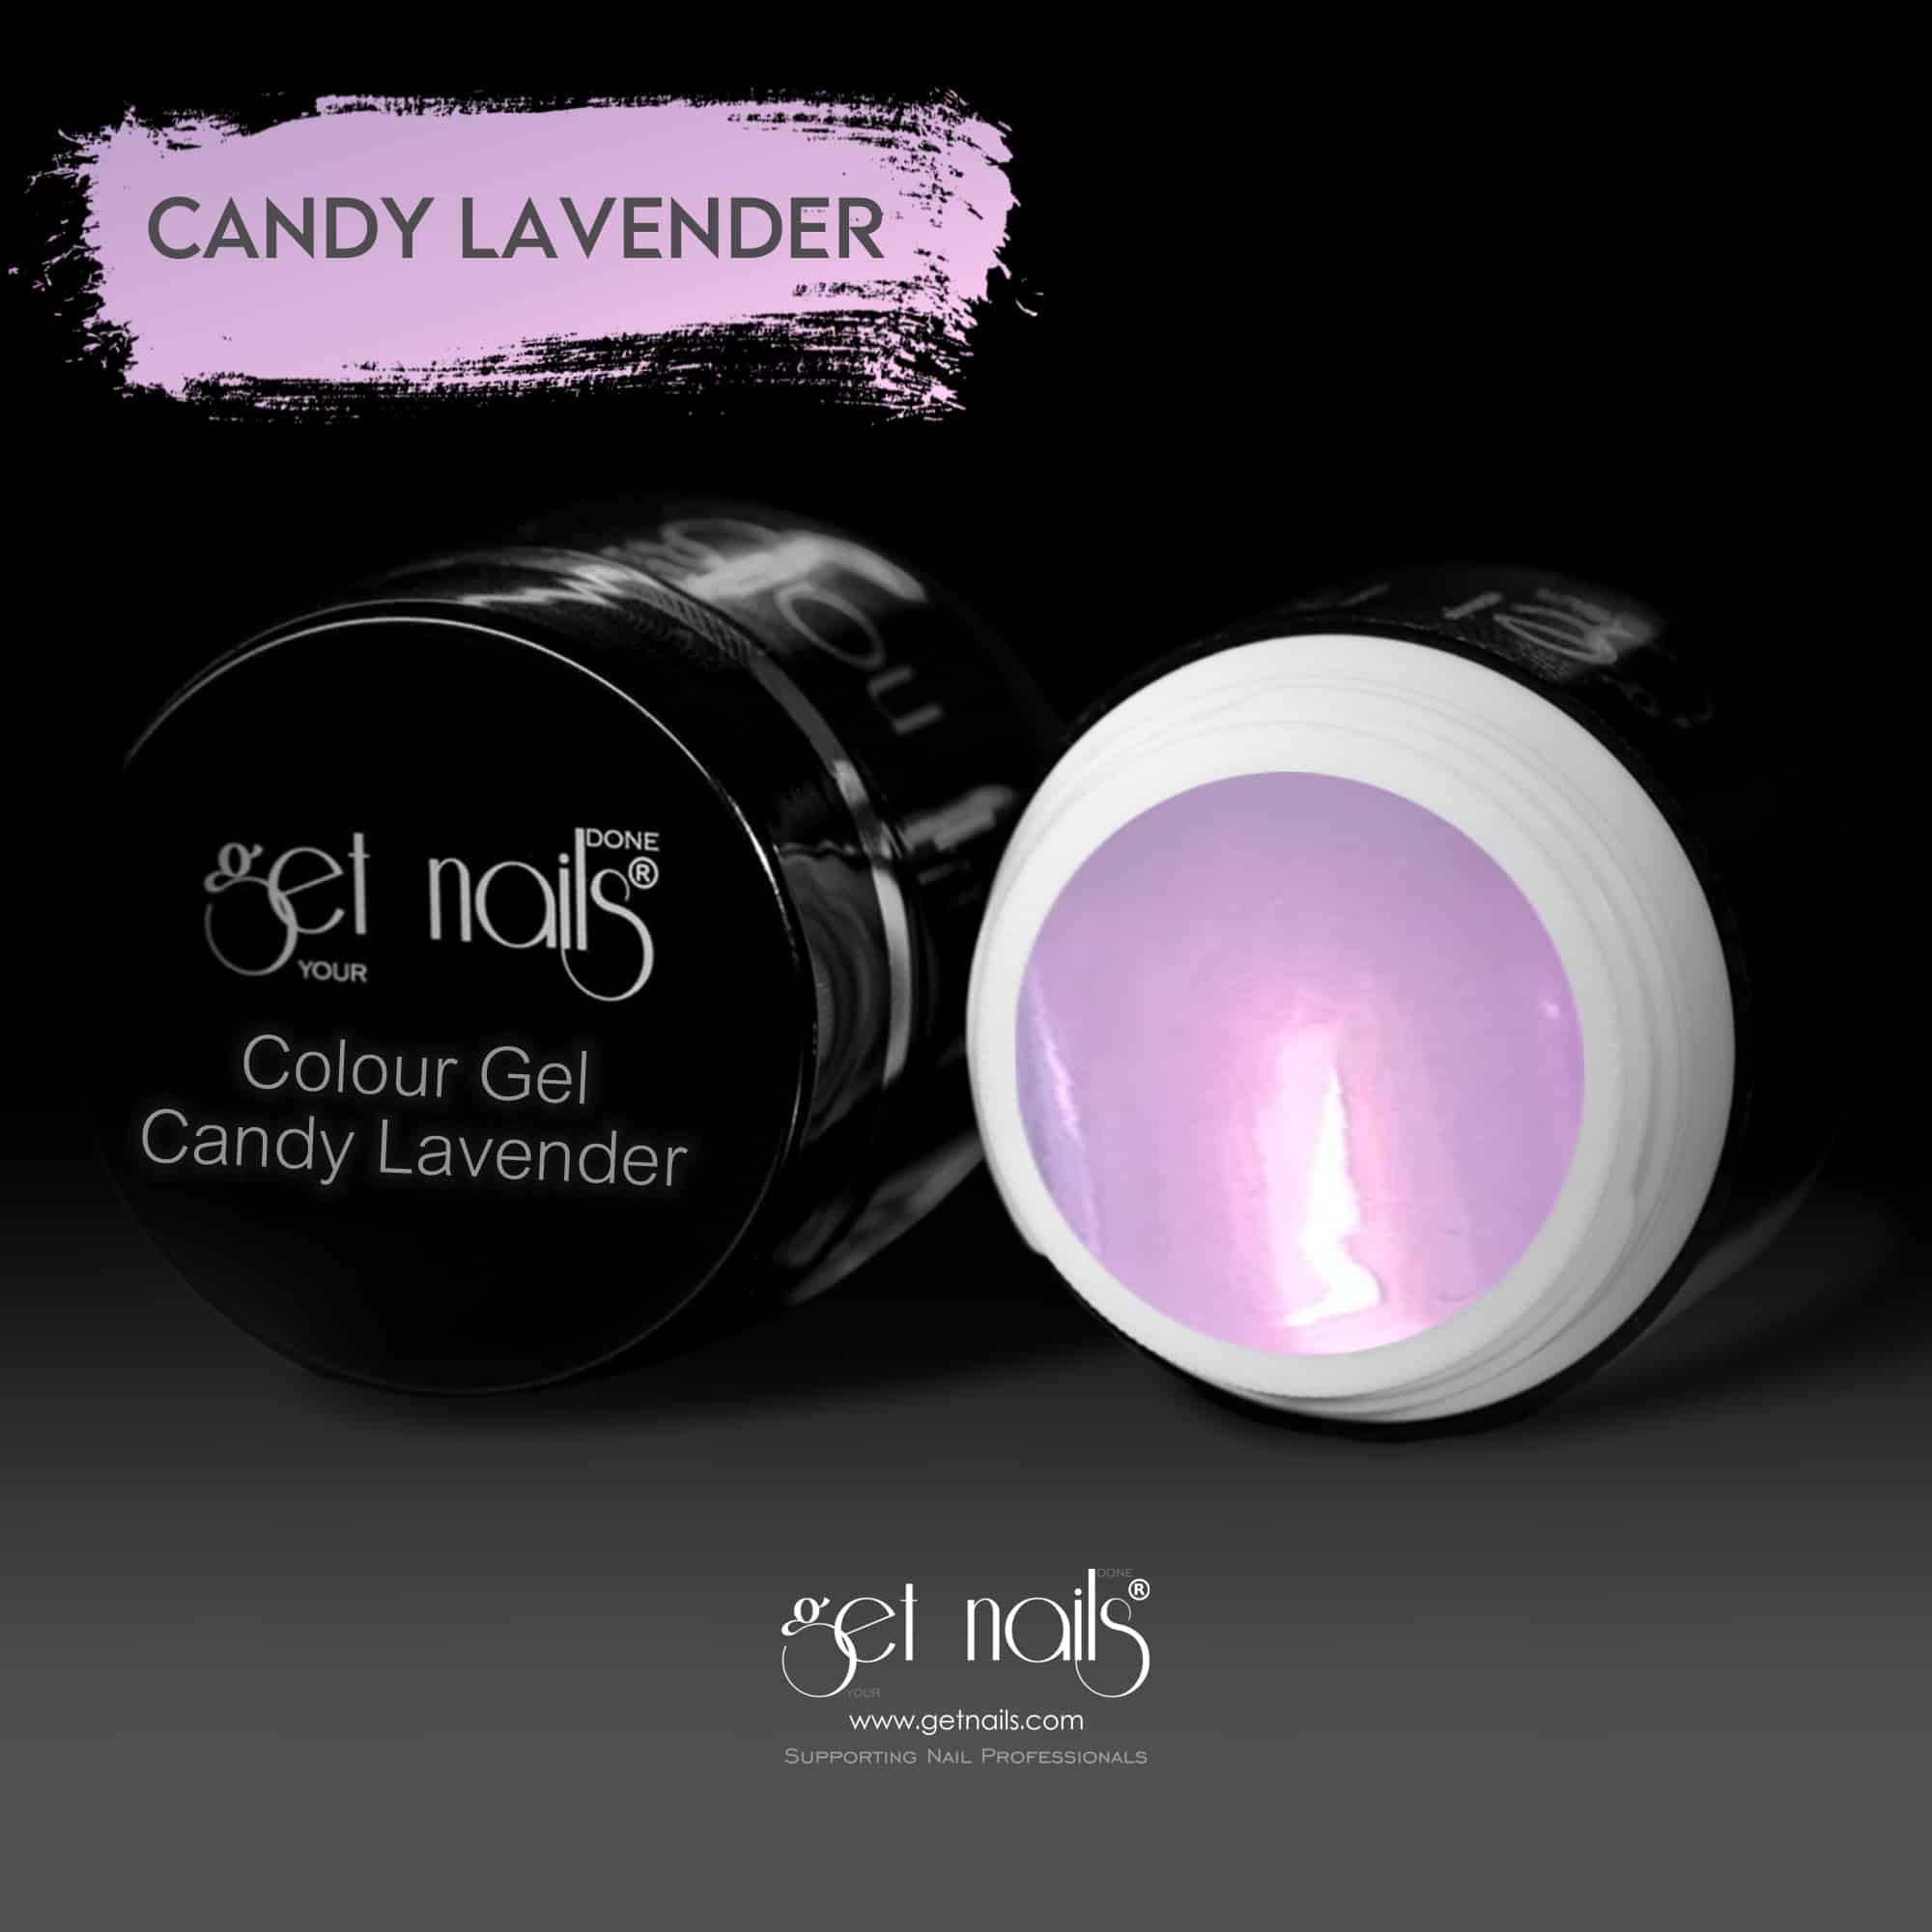 Get Nails Austria - Цветной гель Candy Lavender 5g